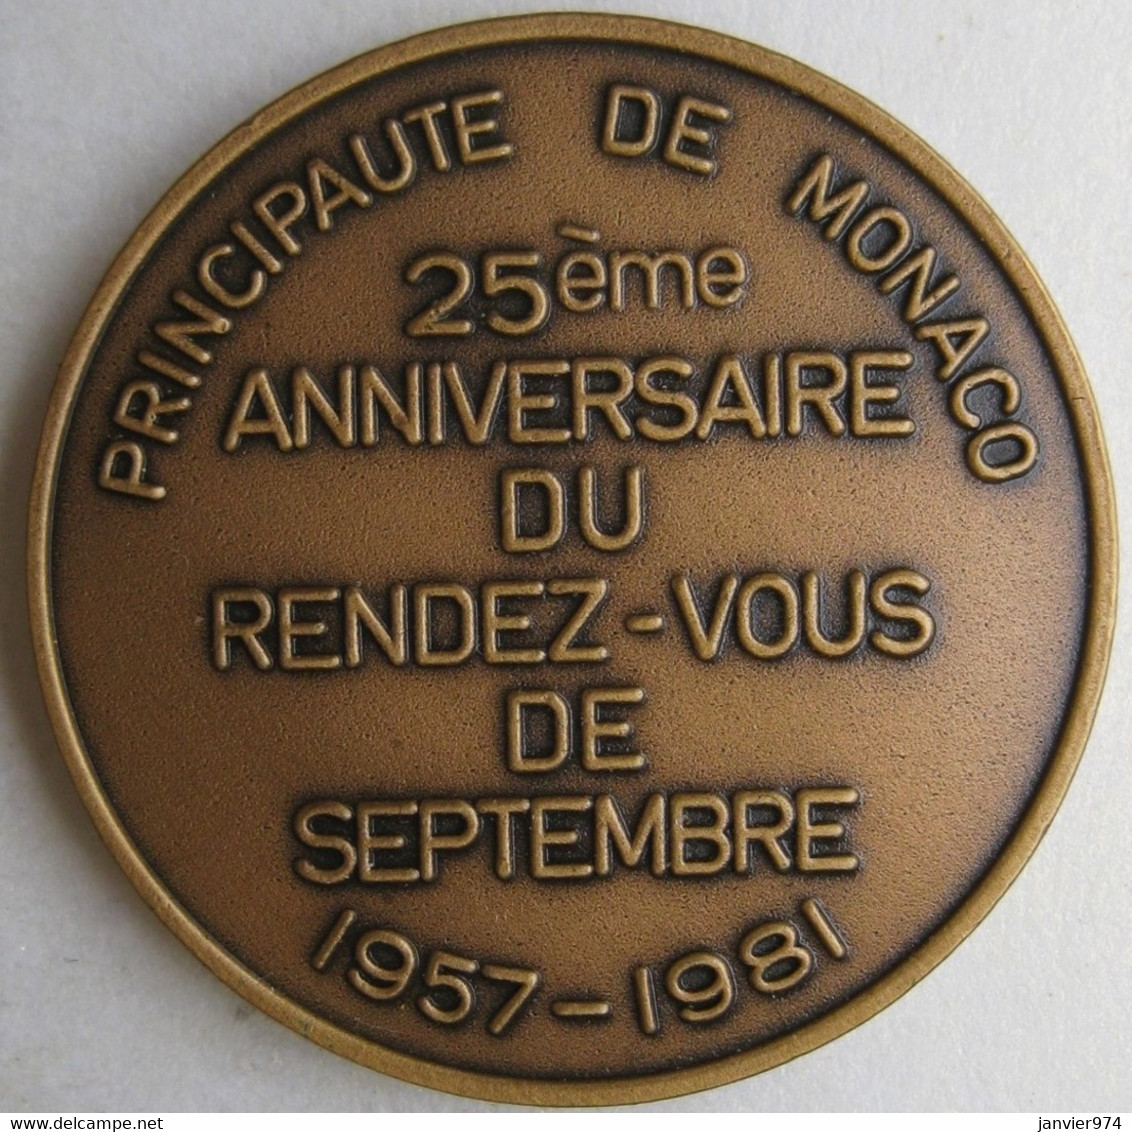 Monaco Jeton Assurance Principauté De Monaco - 25ème Anniversaire 1957-1981 - Professionali / Di Società